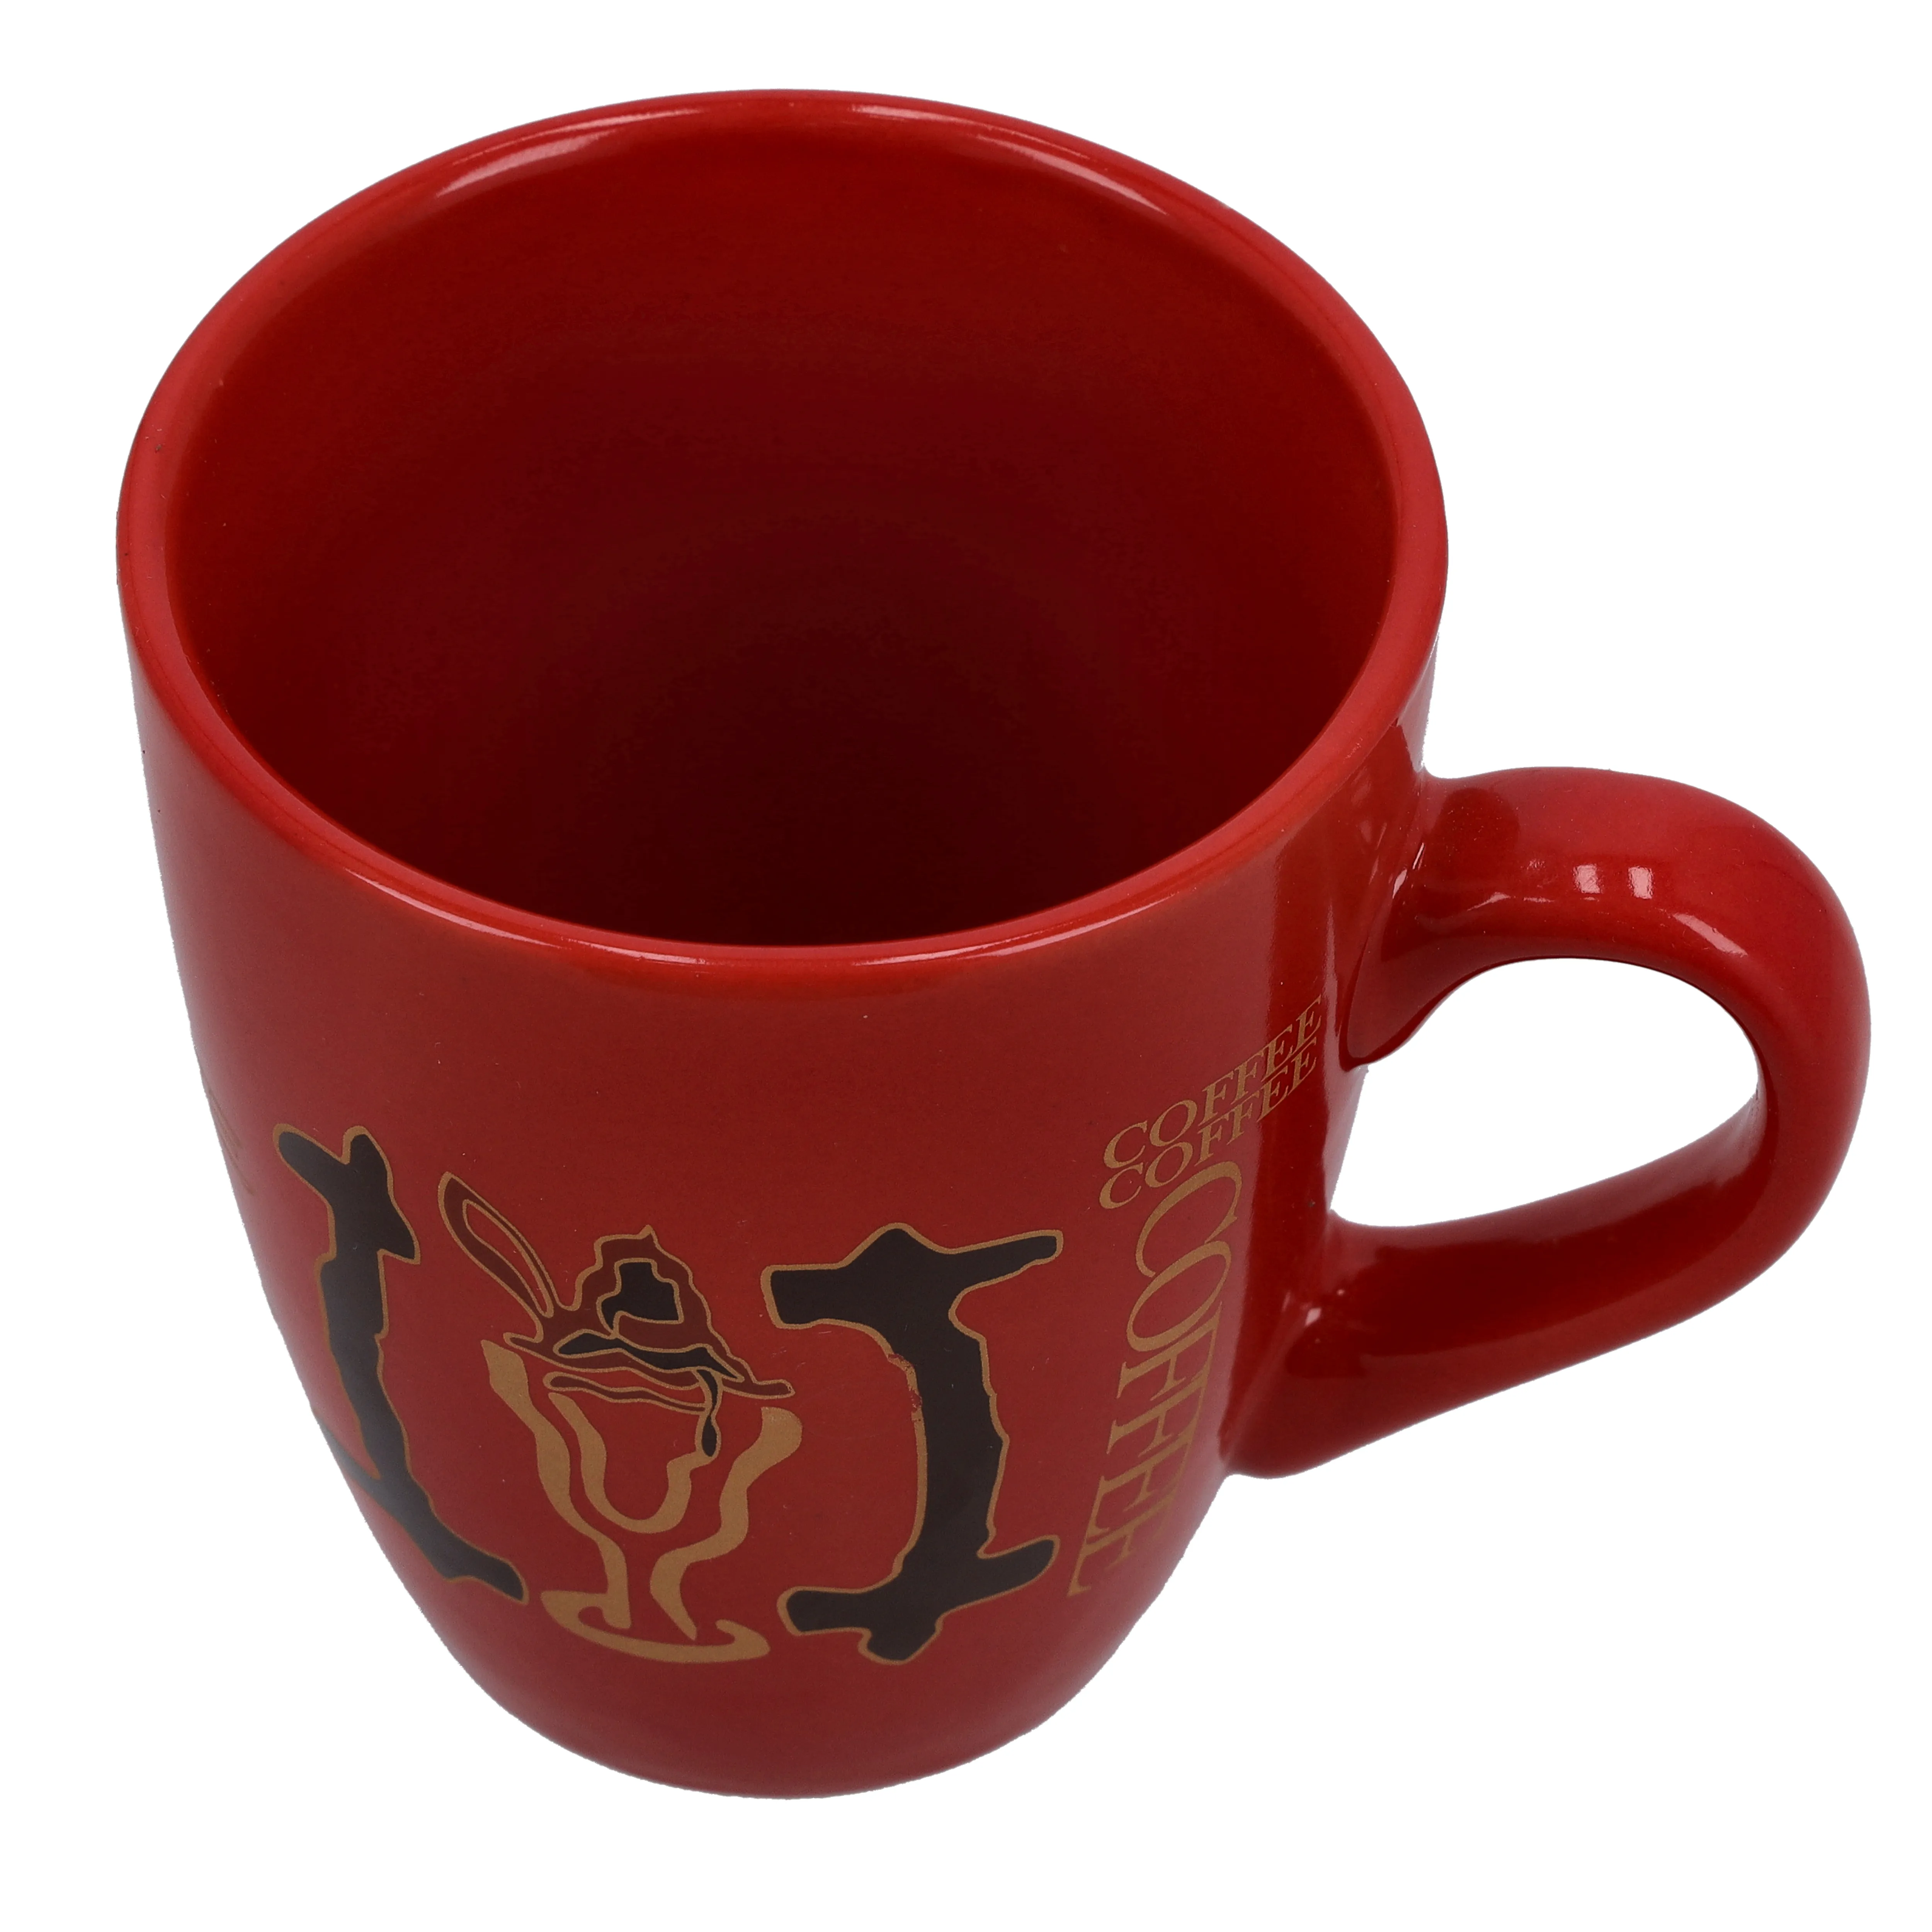 Royalford Porcelain Coffee Mug, 11 Oz